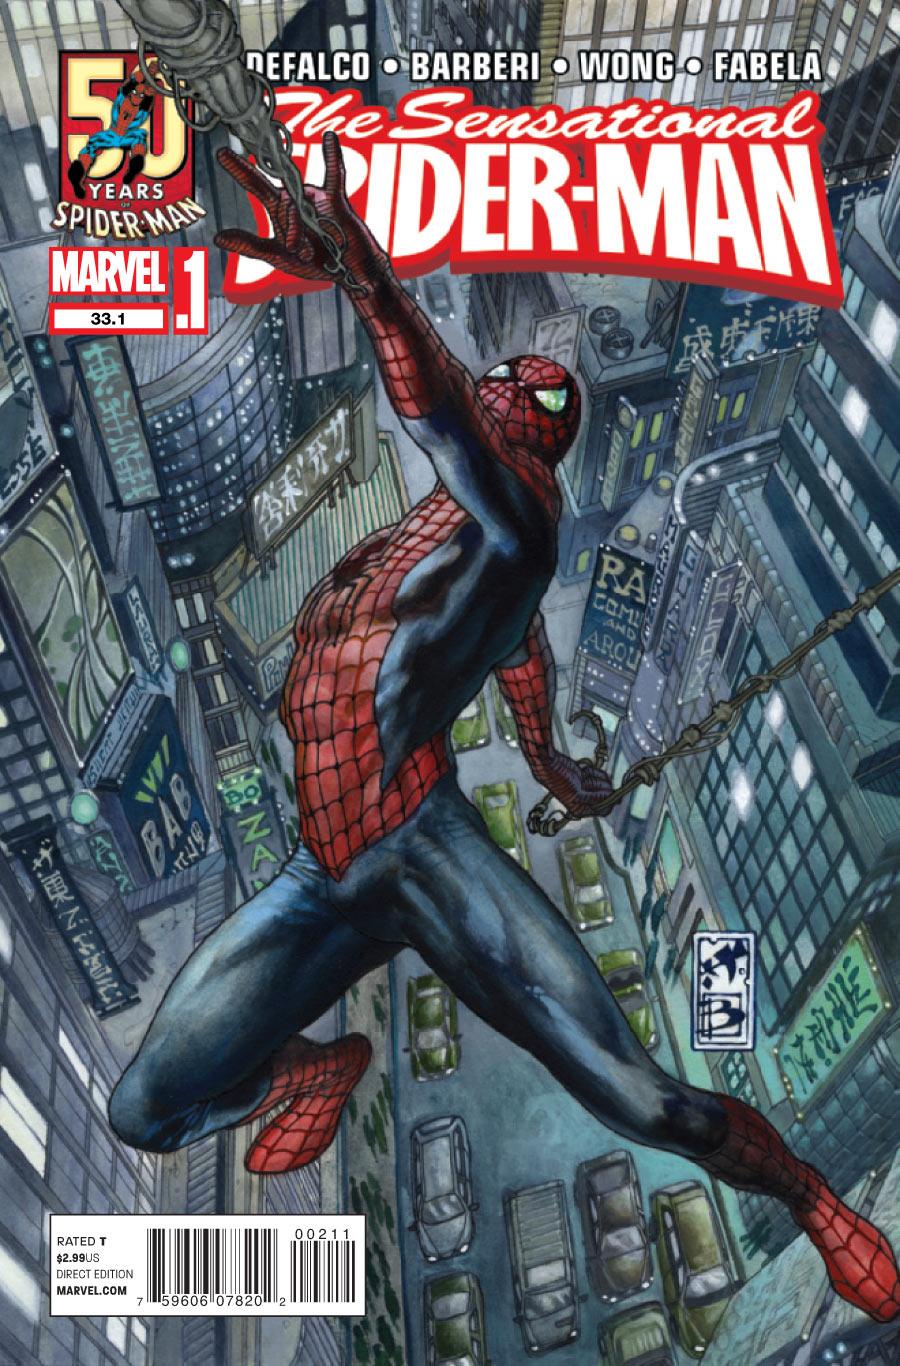 The Sensational Spider-Man Vol. 1 #33.1